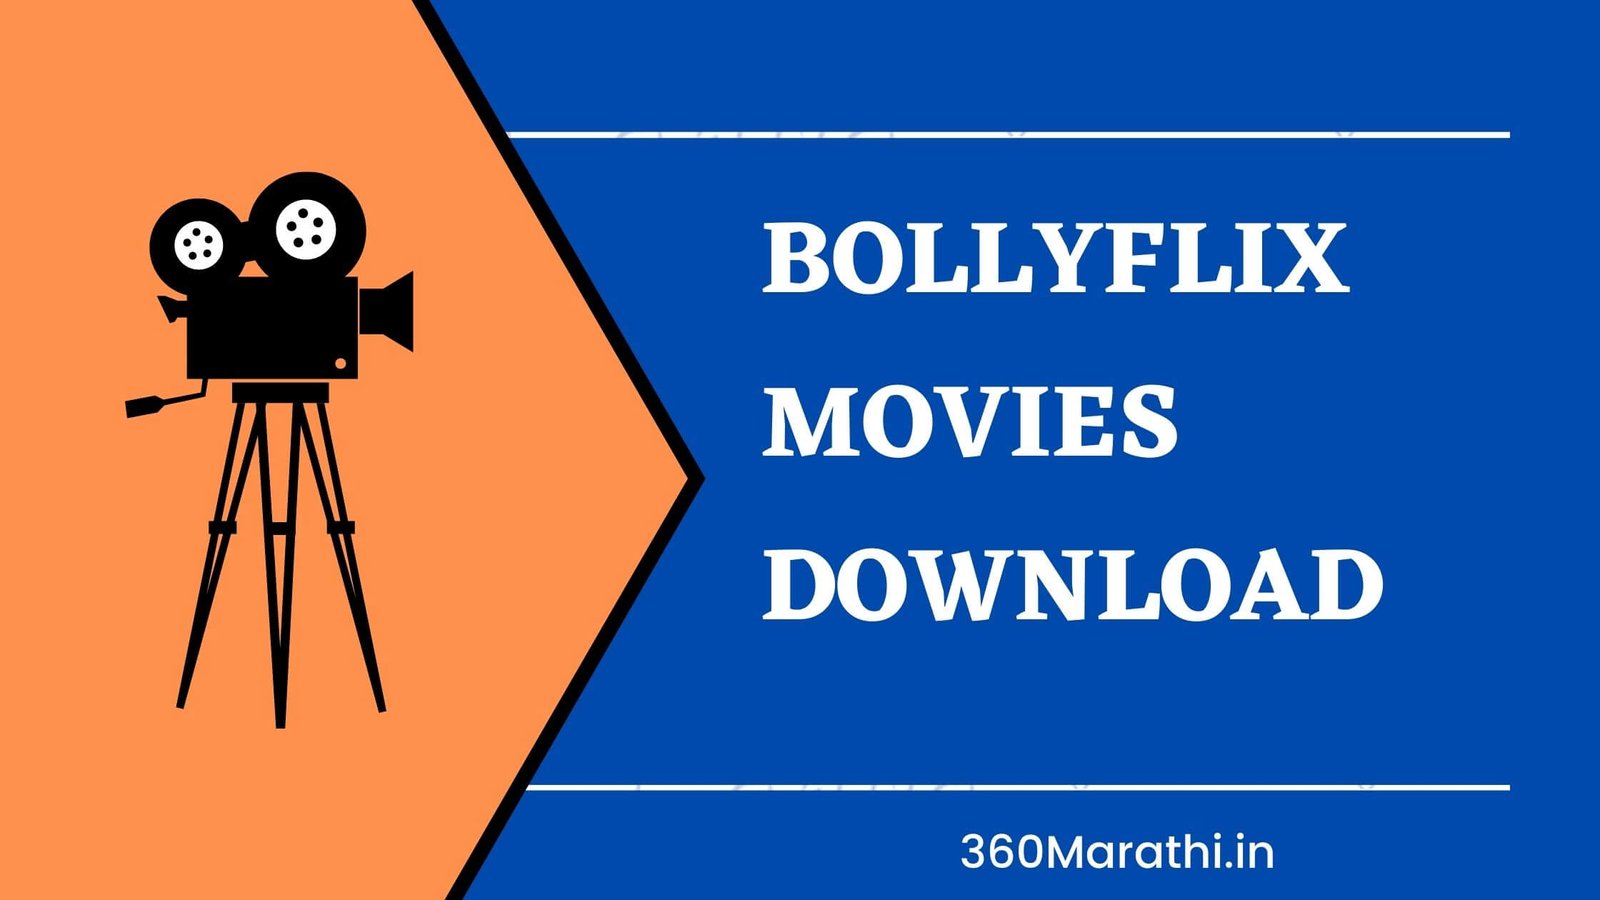 Bollyflix Movies Download